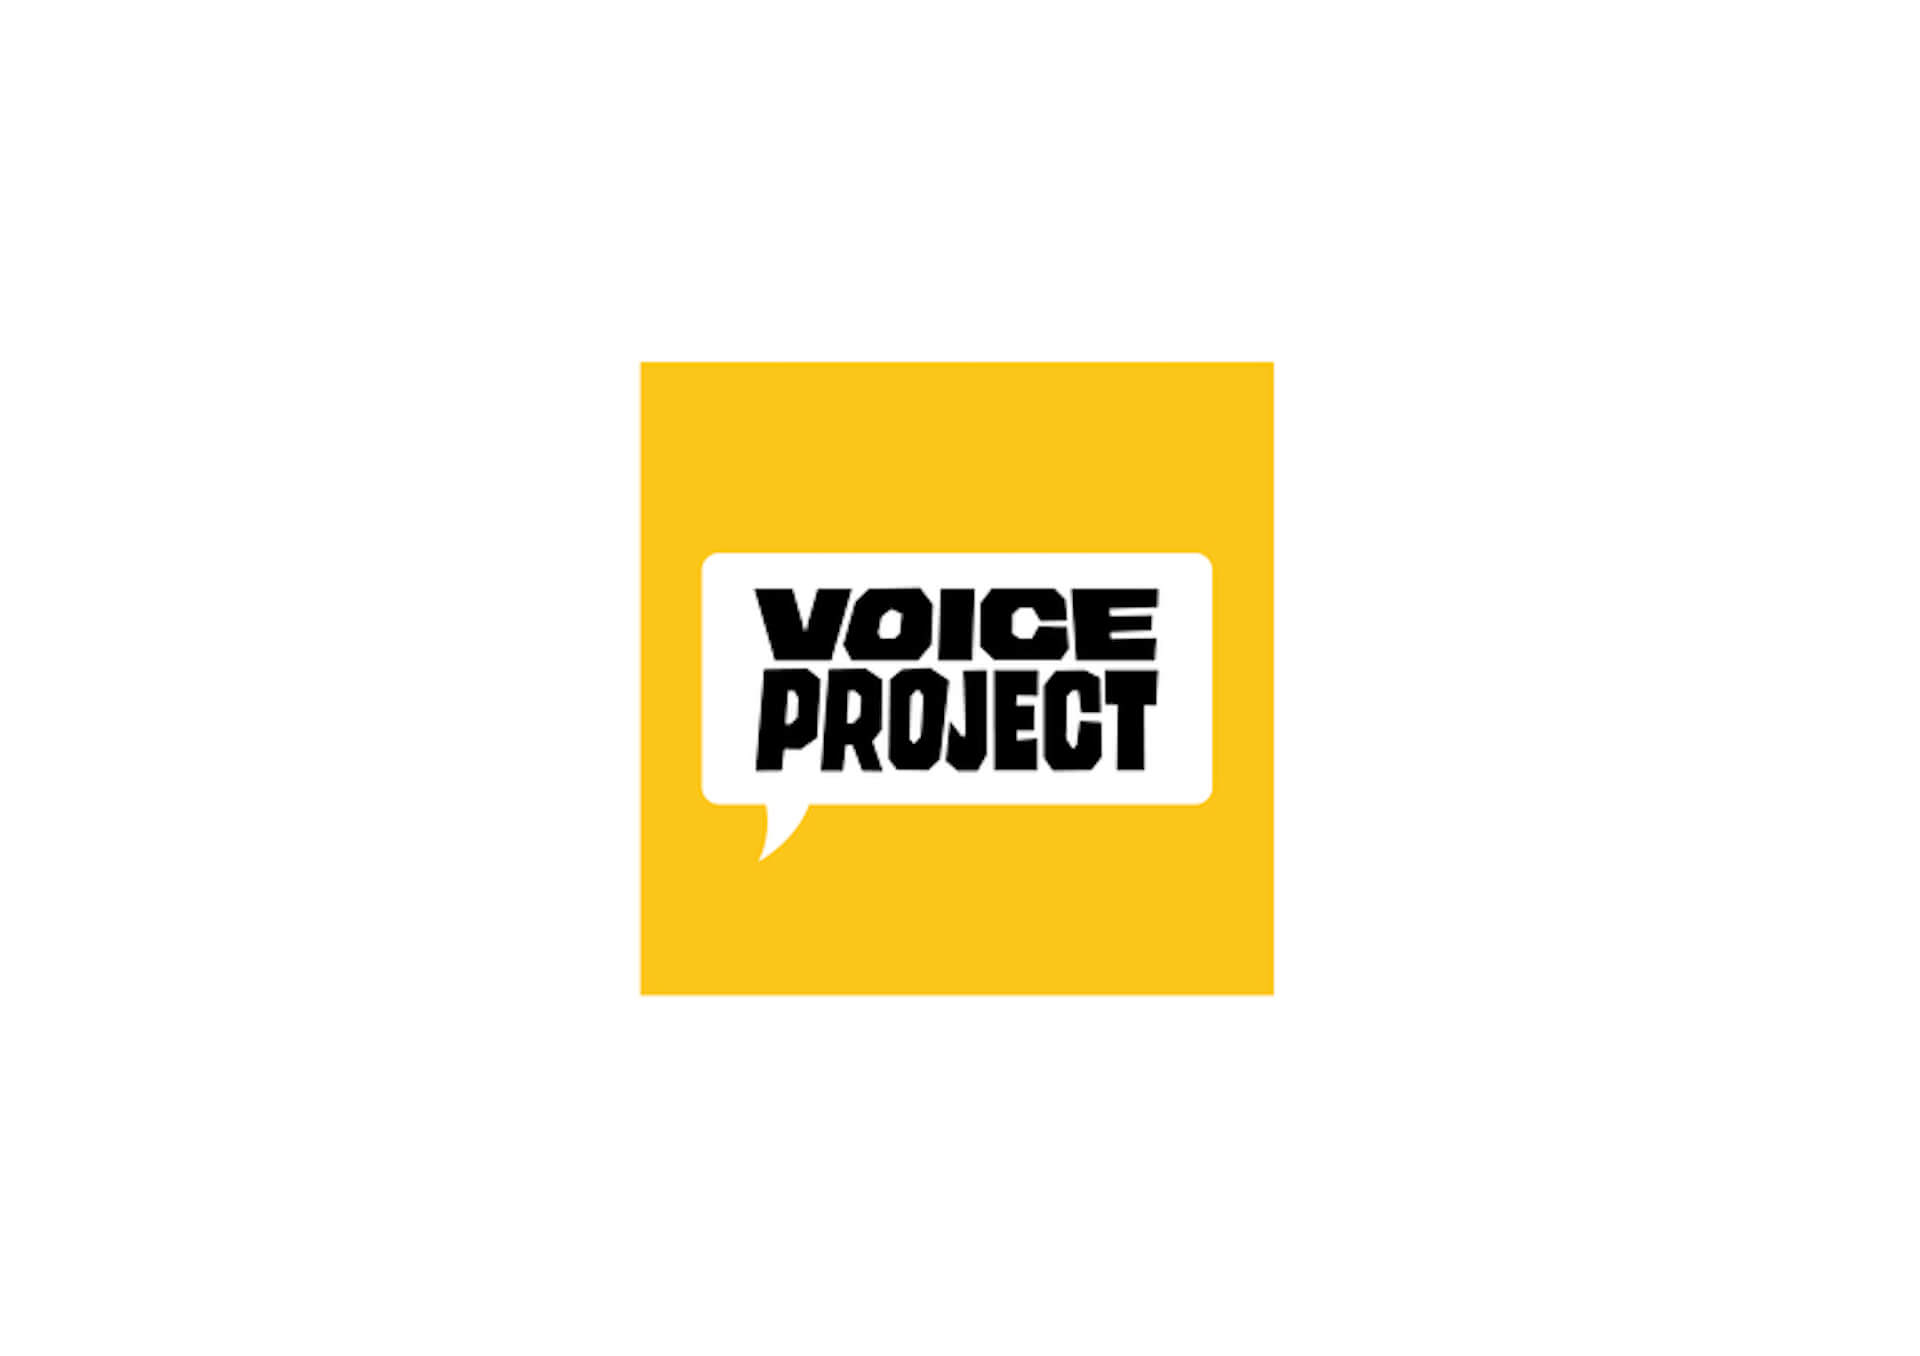 VOICE PROJECTによる「投票呼びかけ動画」にAwich、Chara、Licaxxx、般若らミュージシャン・俳優が参加｜動画制作のクラウドファンディング実施中 culture220622_voice-project-01